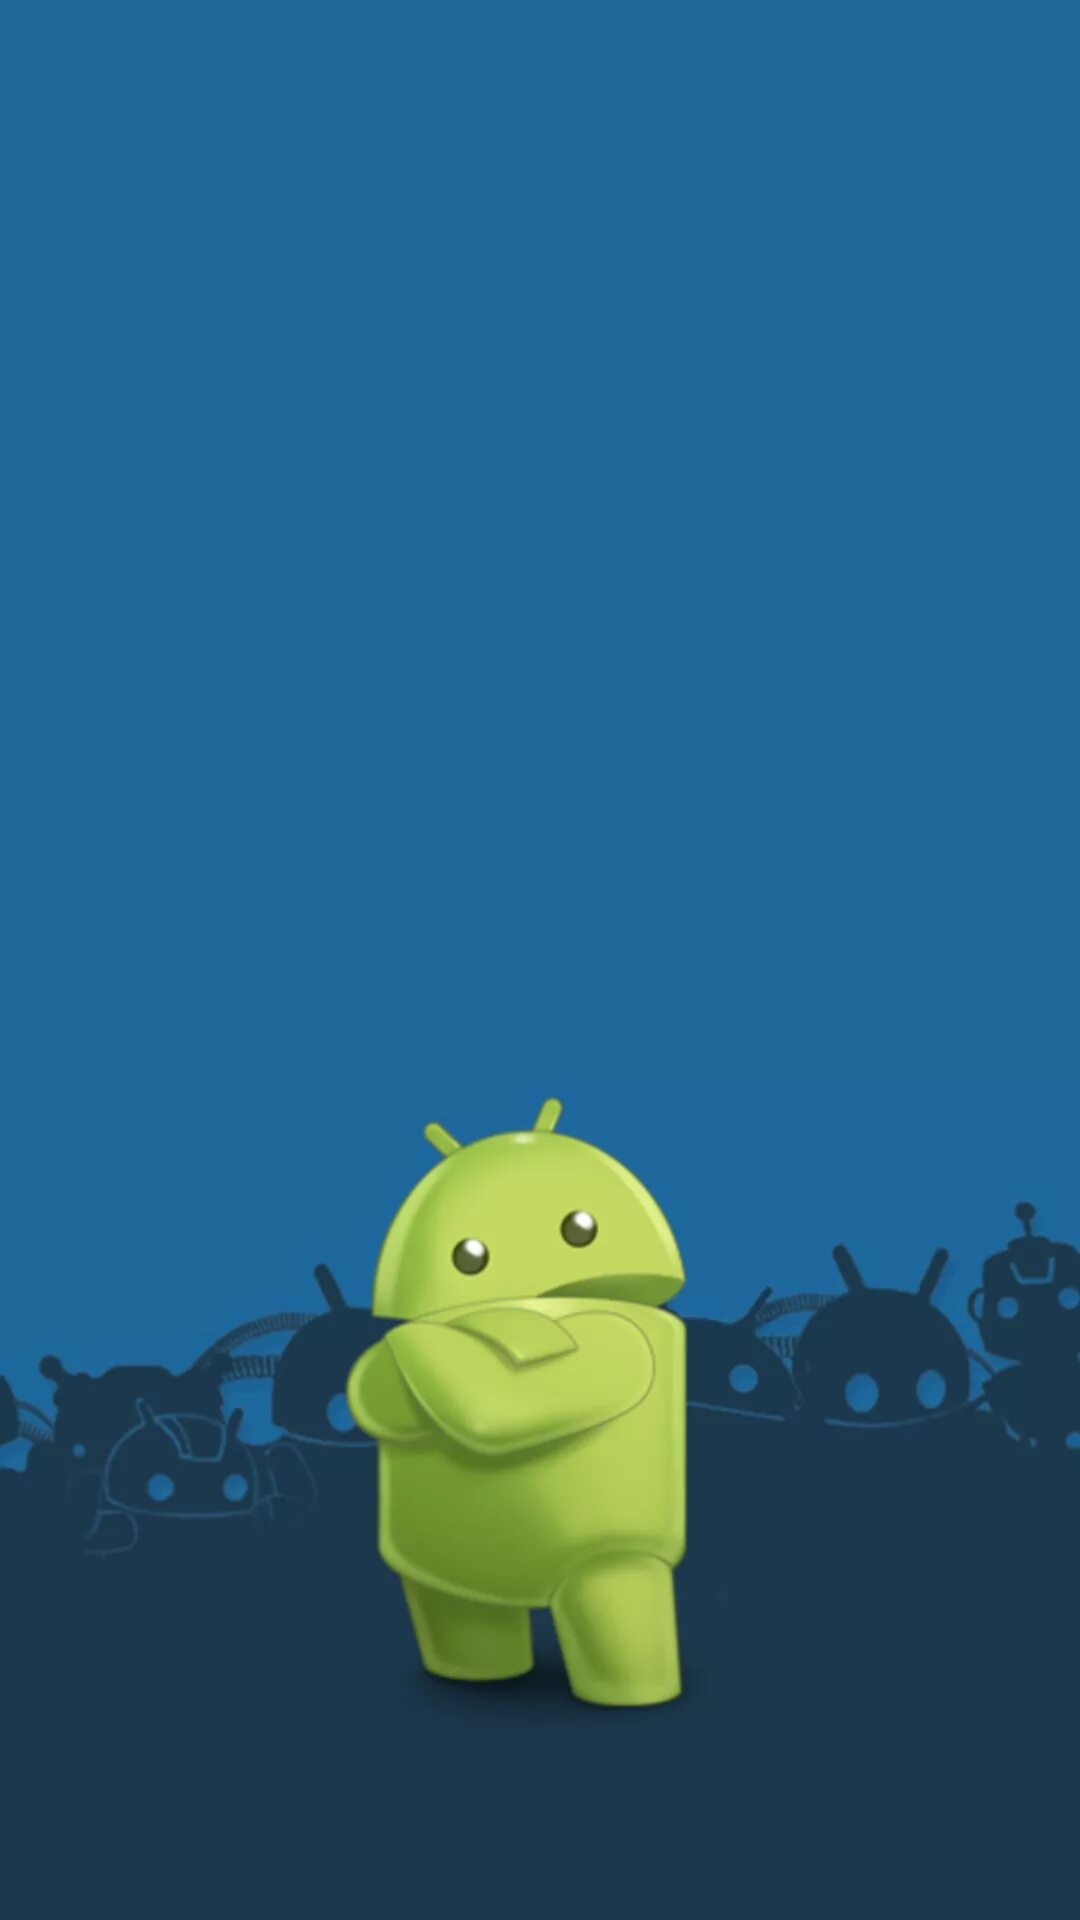 Логотип андроид на заставку. Андроид. Логотип андроид. Заставки на Android. Интересные обои на телефон.